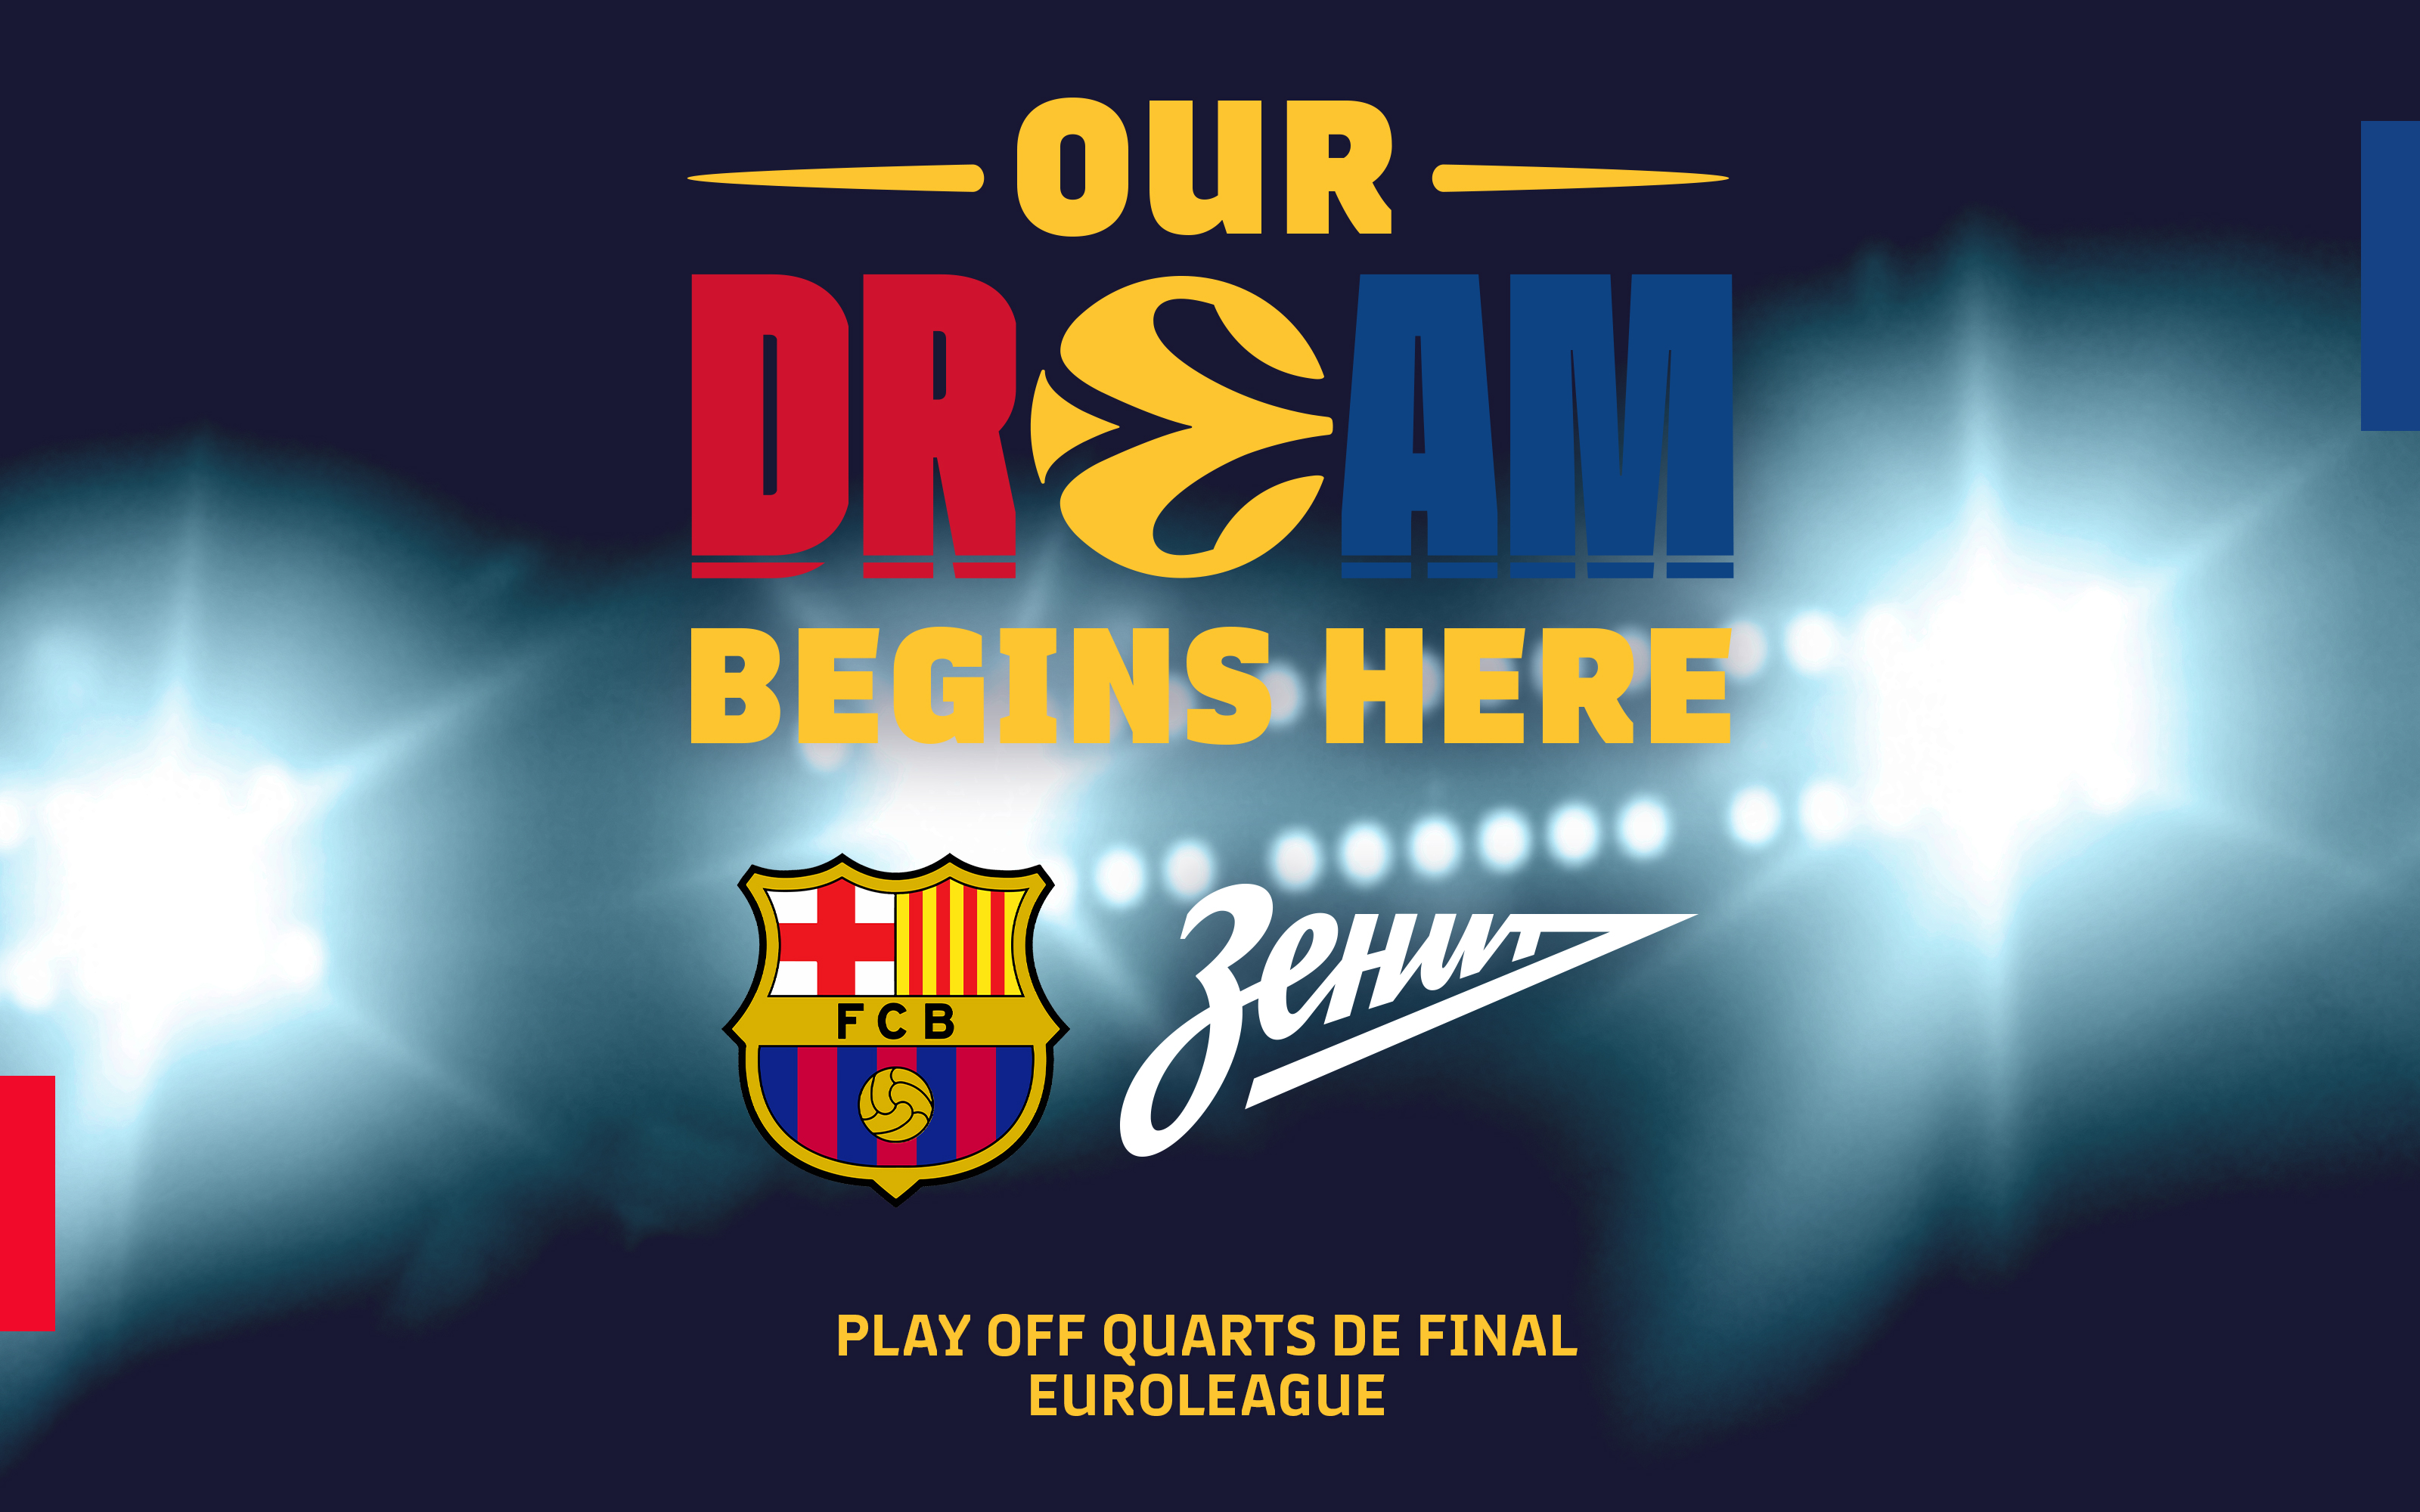 FC Barcelona to face Zenit in the Euroleague quarter finals